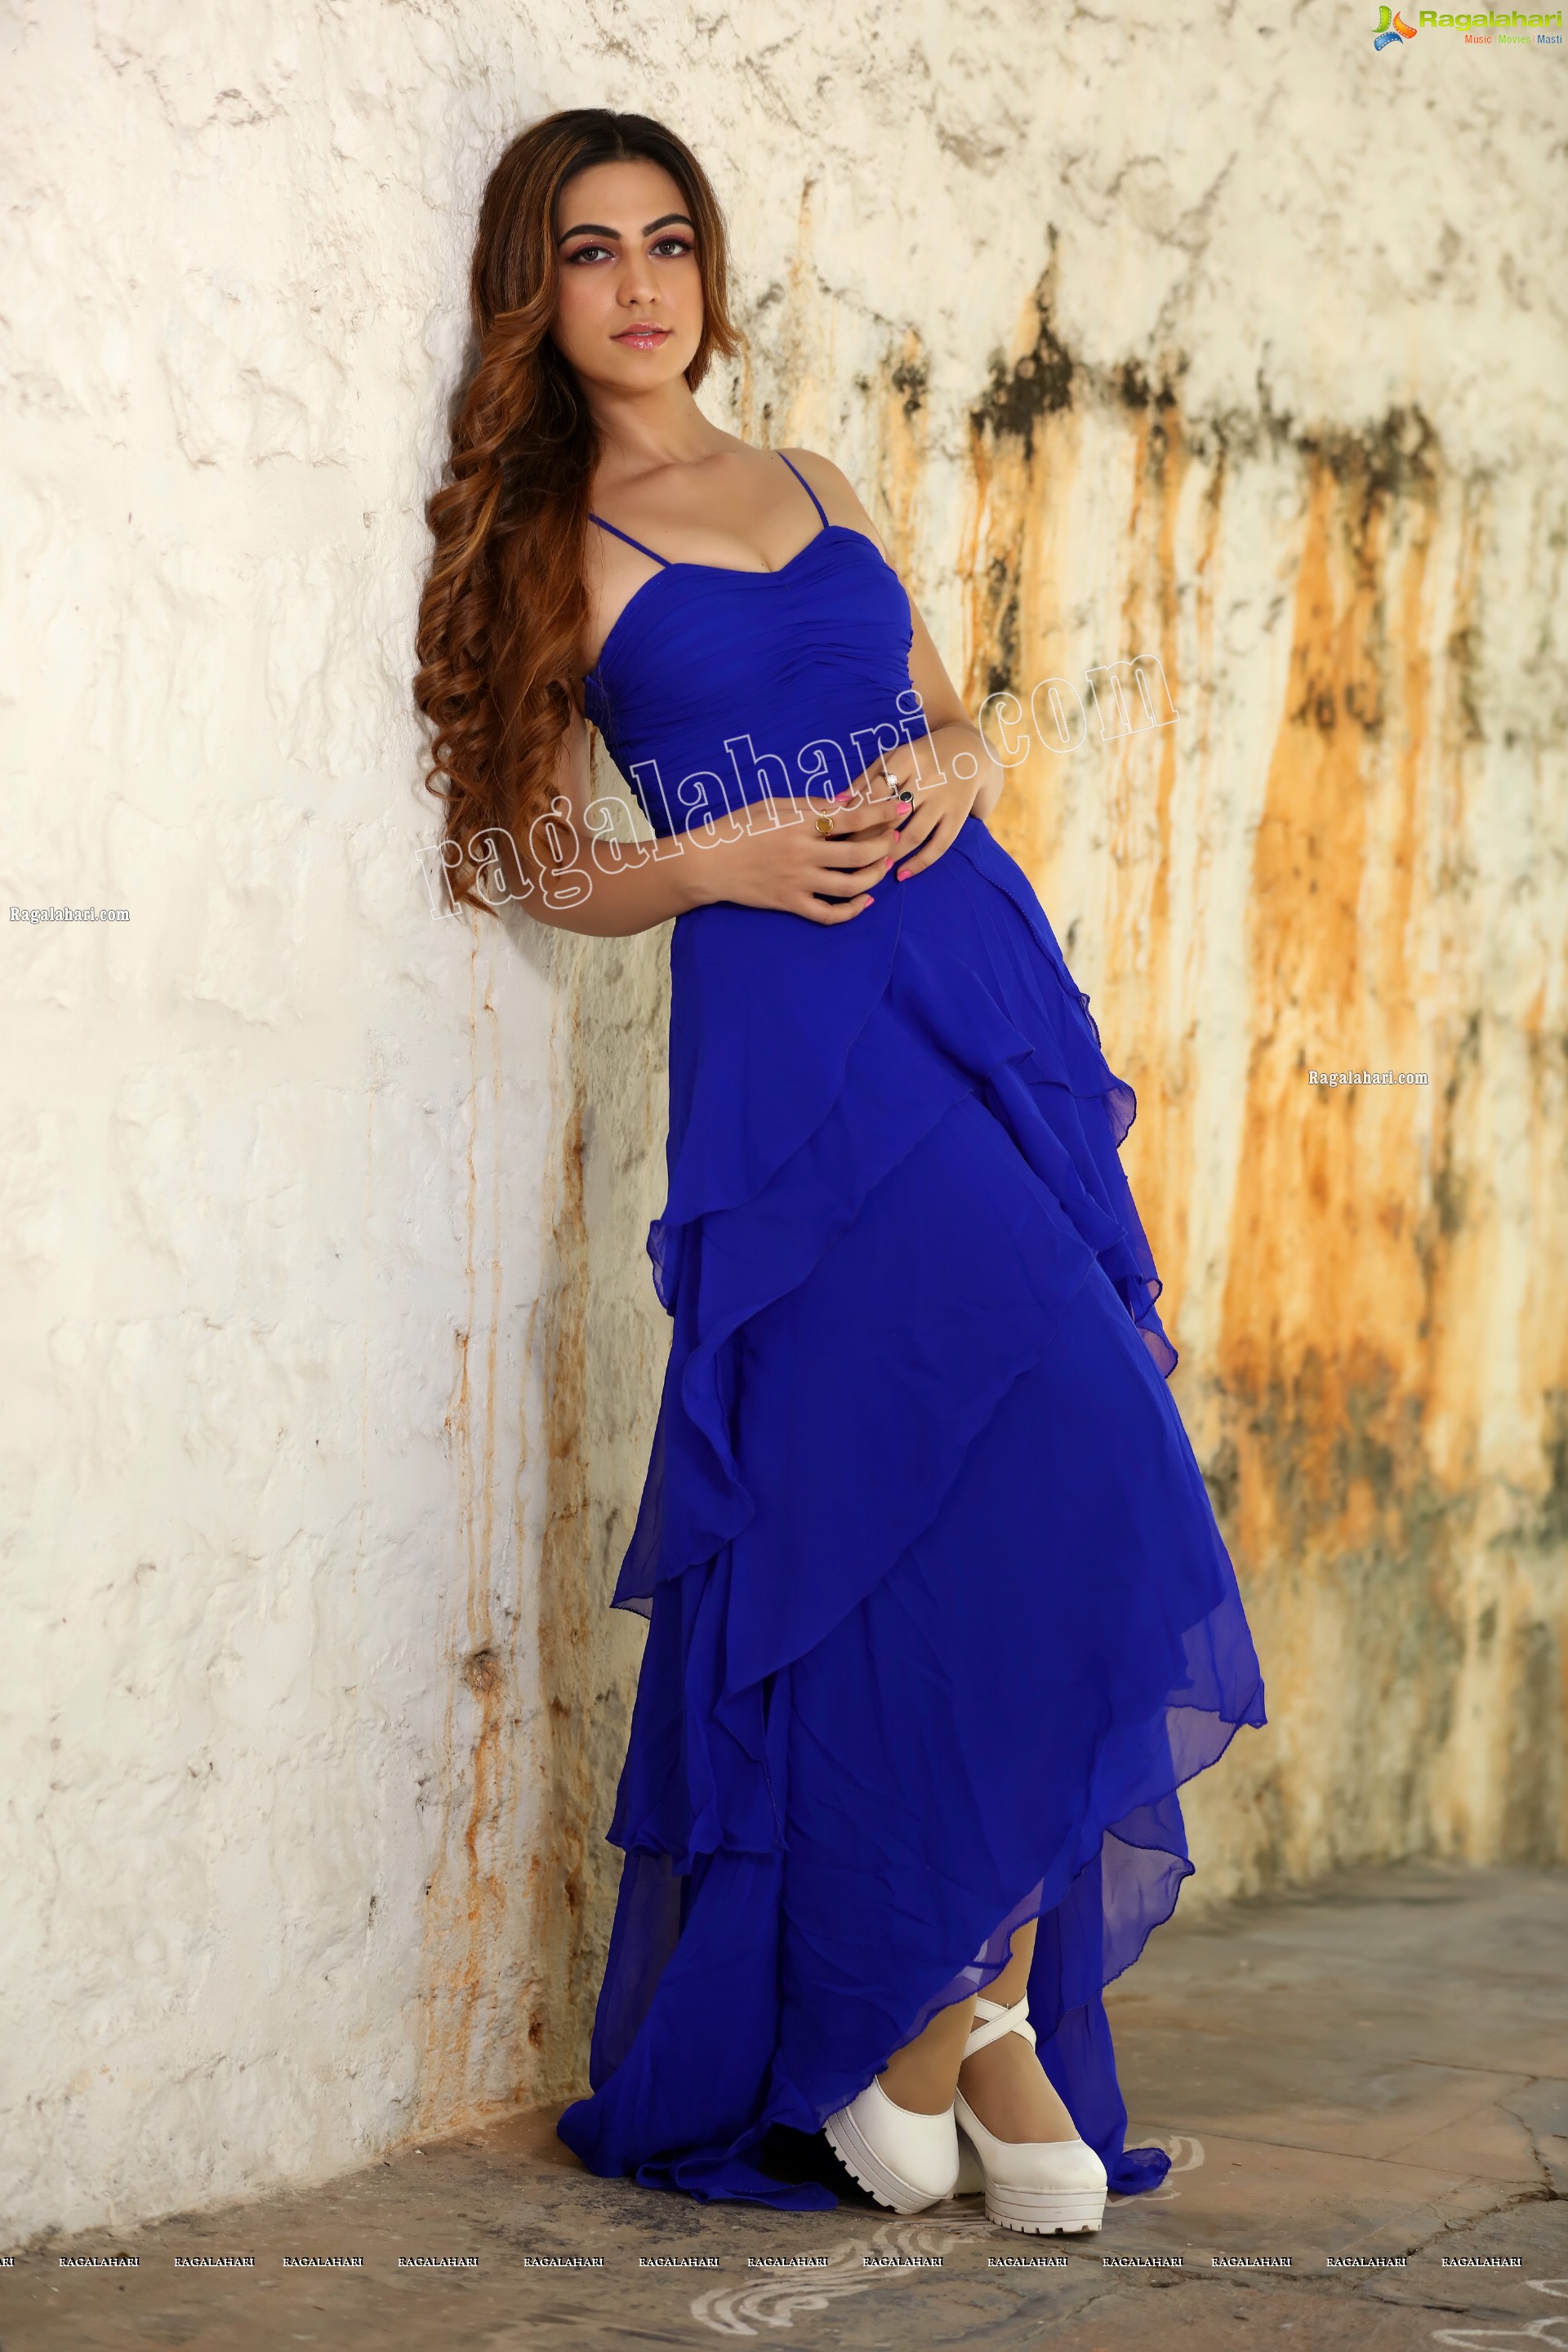 Harshita Panwar in Royal Blue Spaghetti Strap Frill Dress, Exclusive Photo Shoot